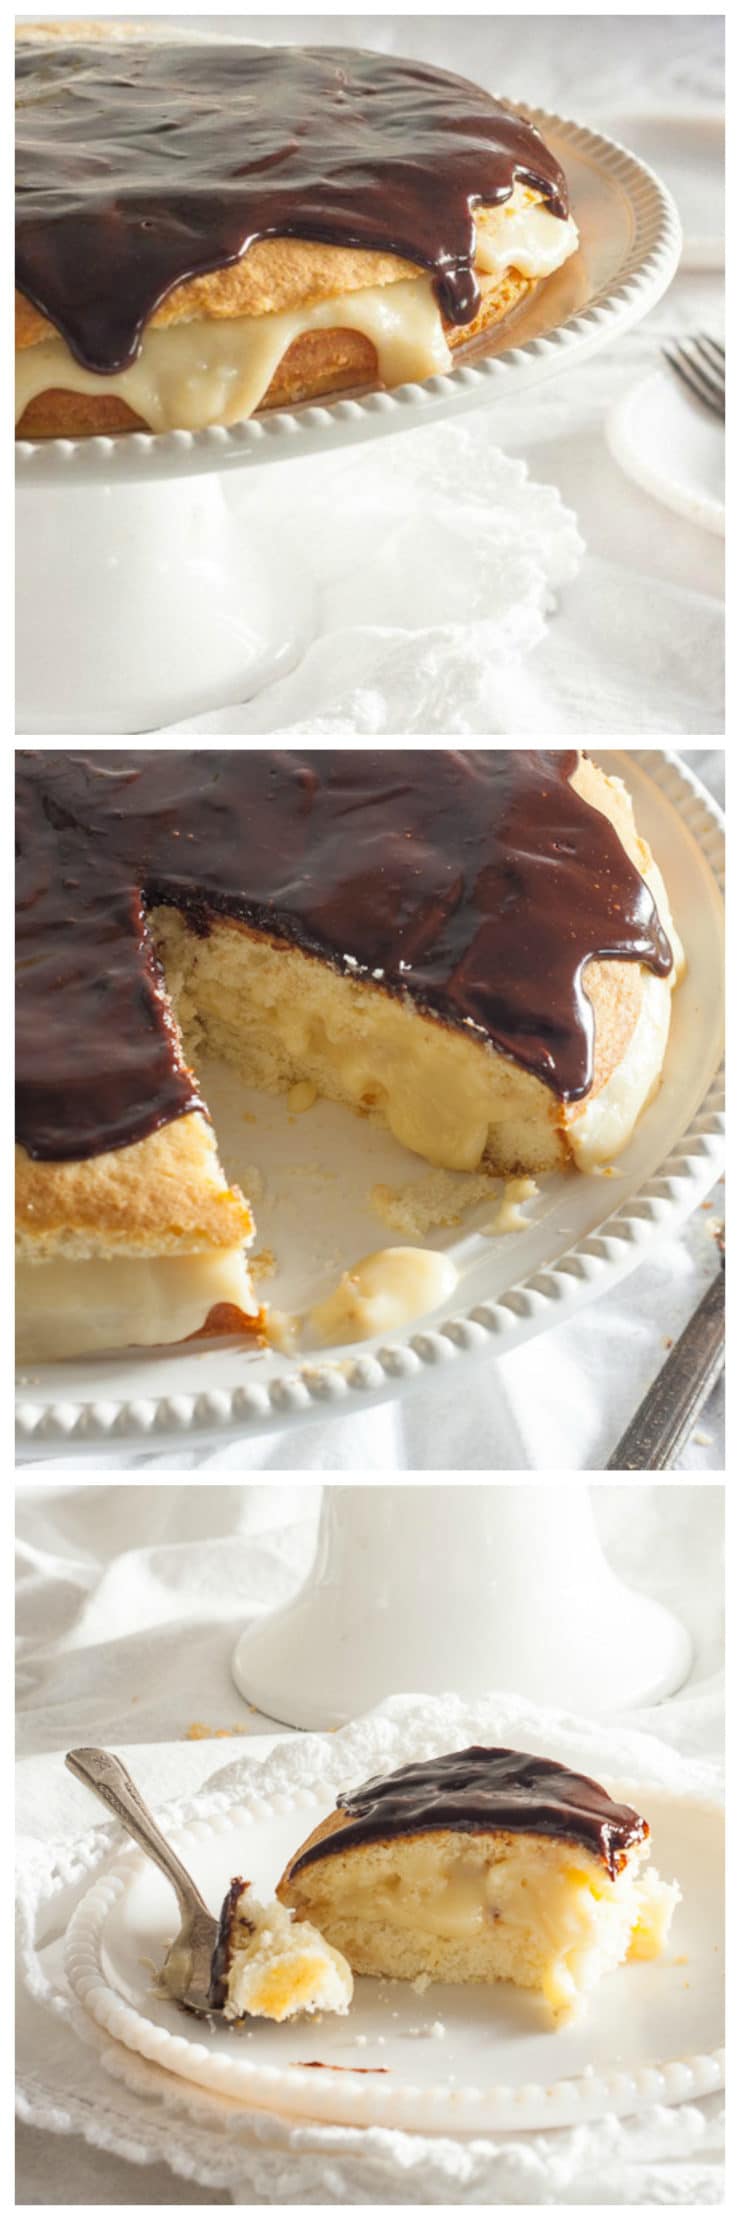 American Cakes - Boston Cream Pie, History and Recipe